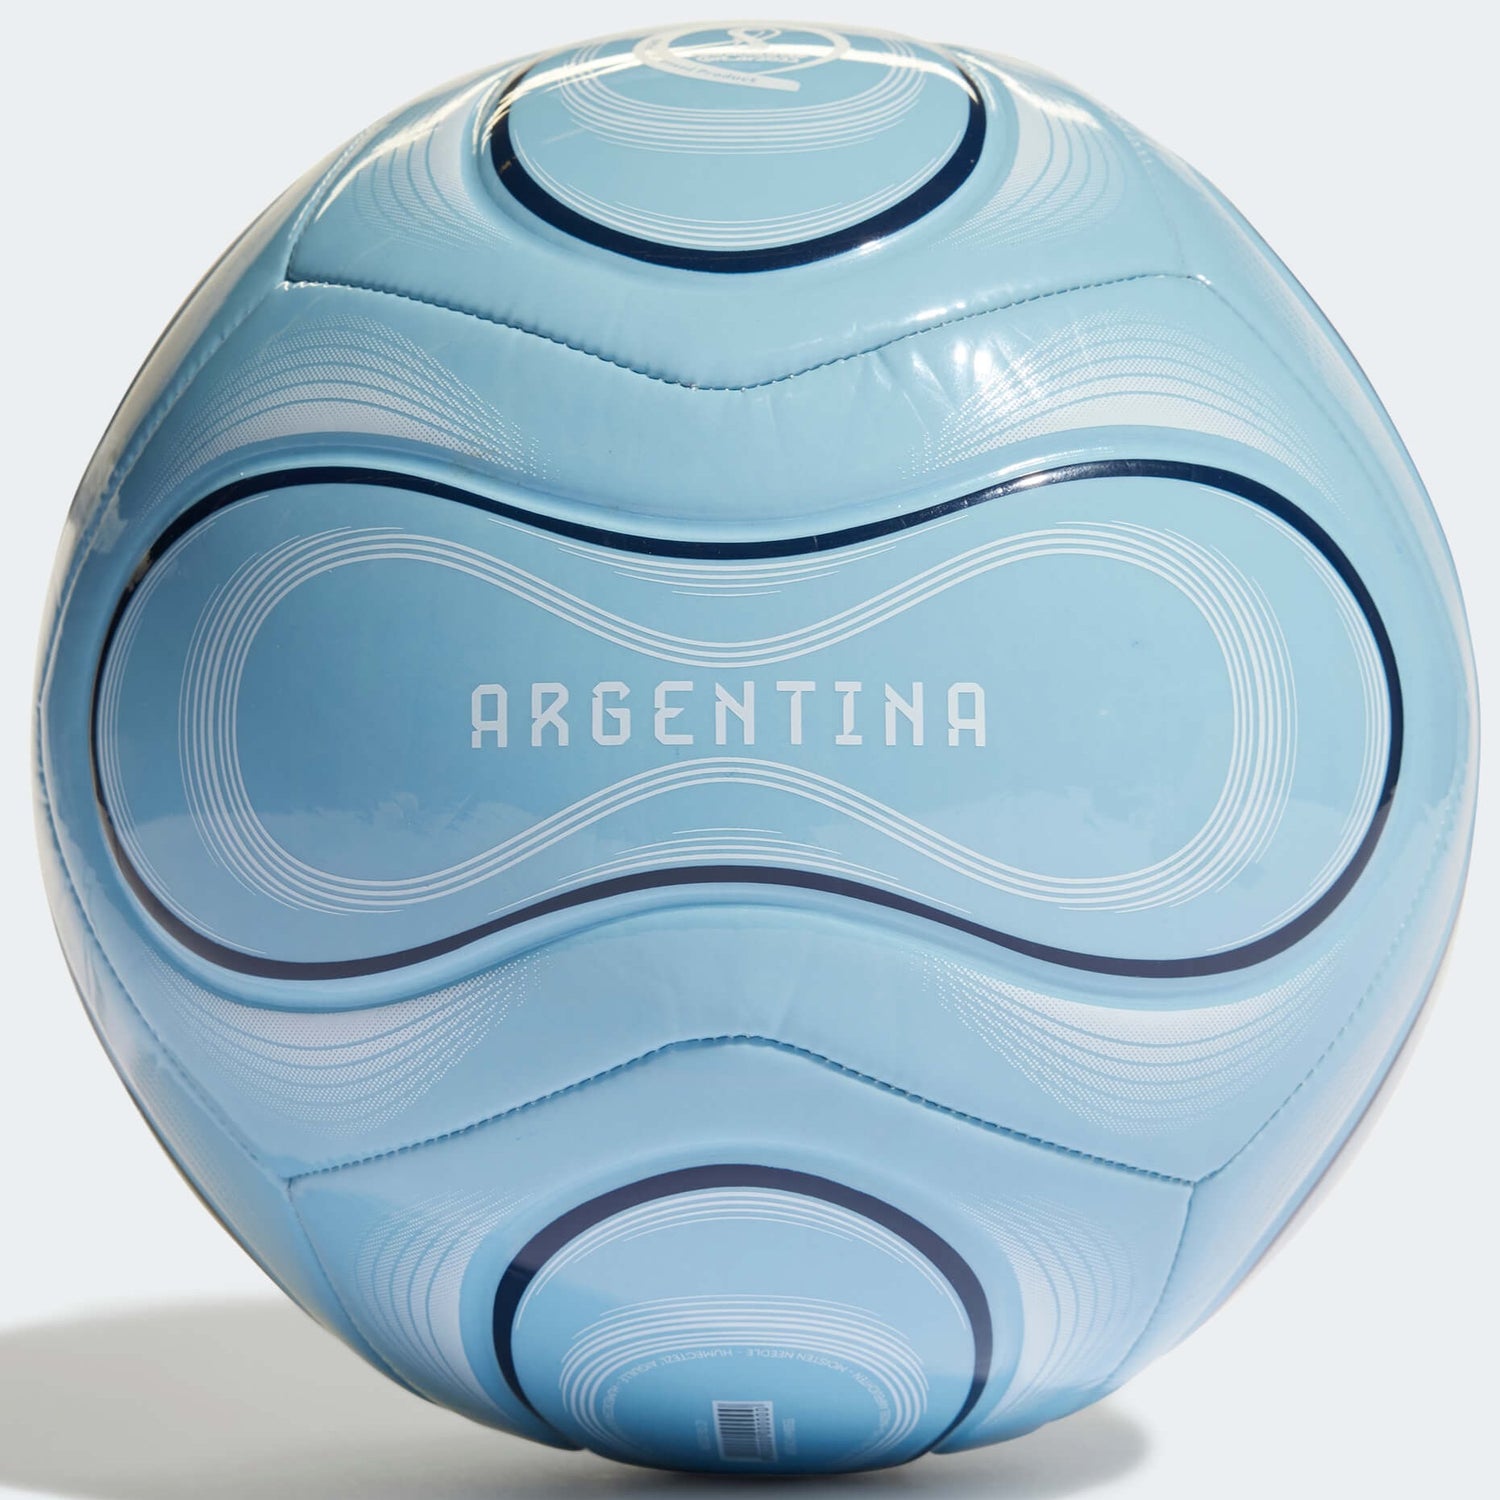 adidas Argentina Club Ball - Clear Blue-Indigo-White (Back)